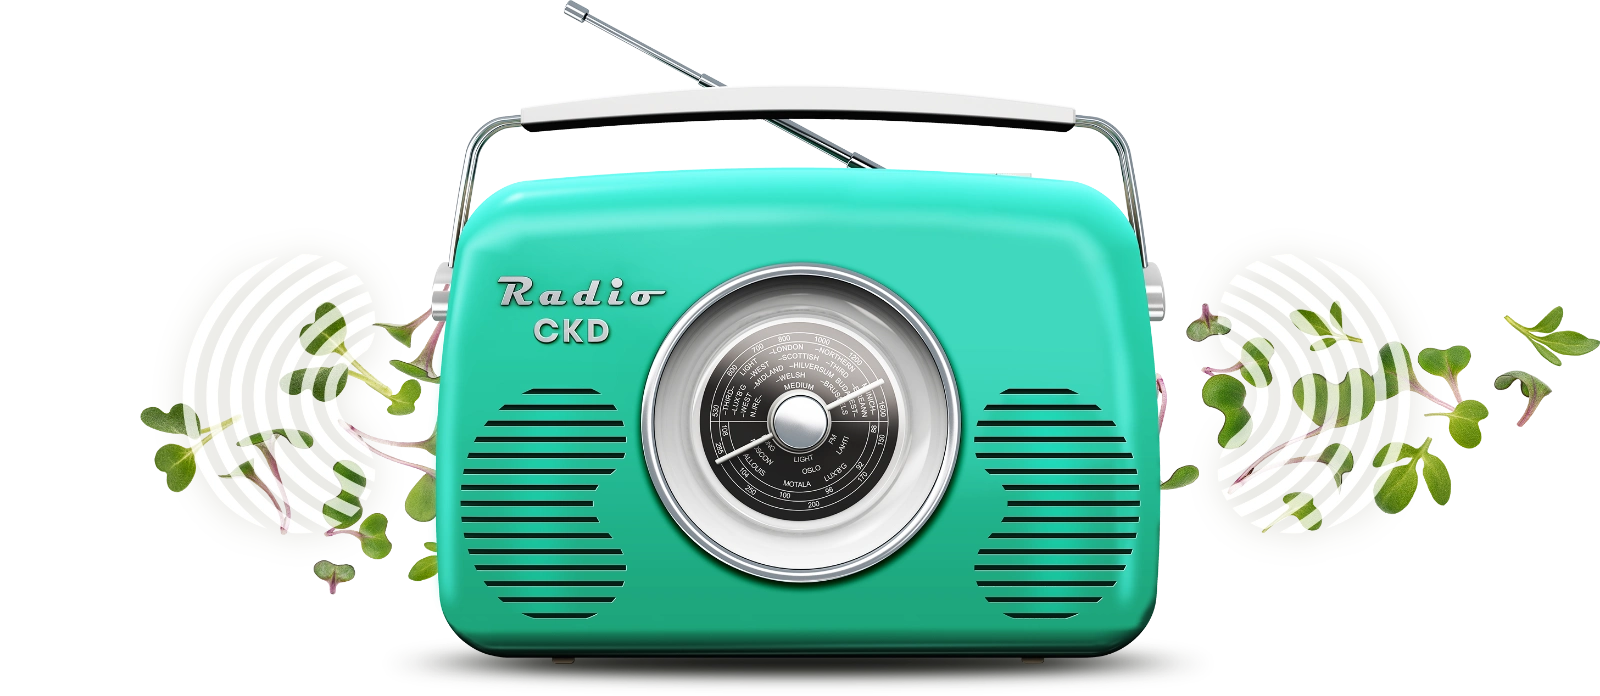 radio CKD